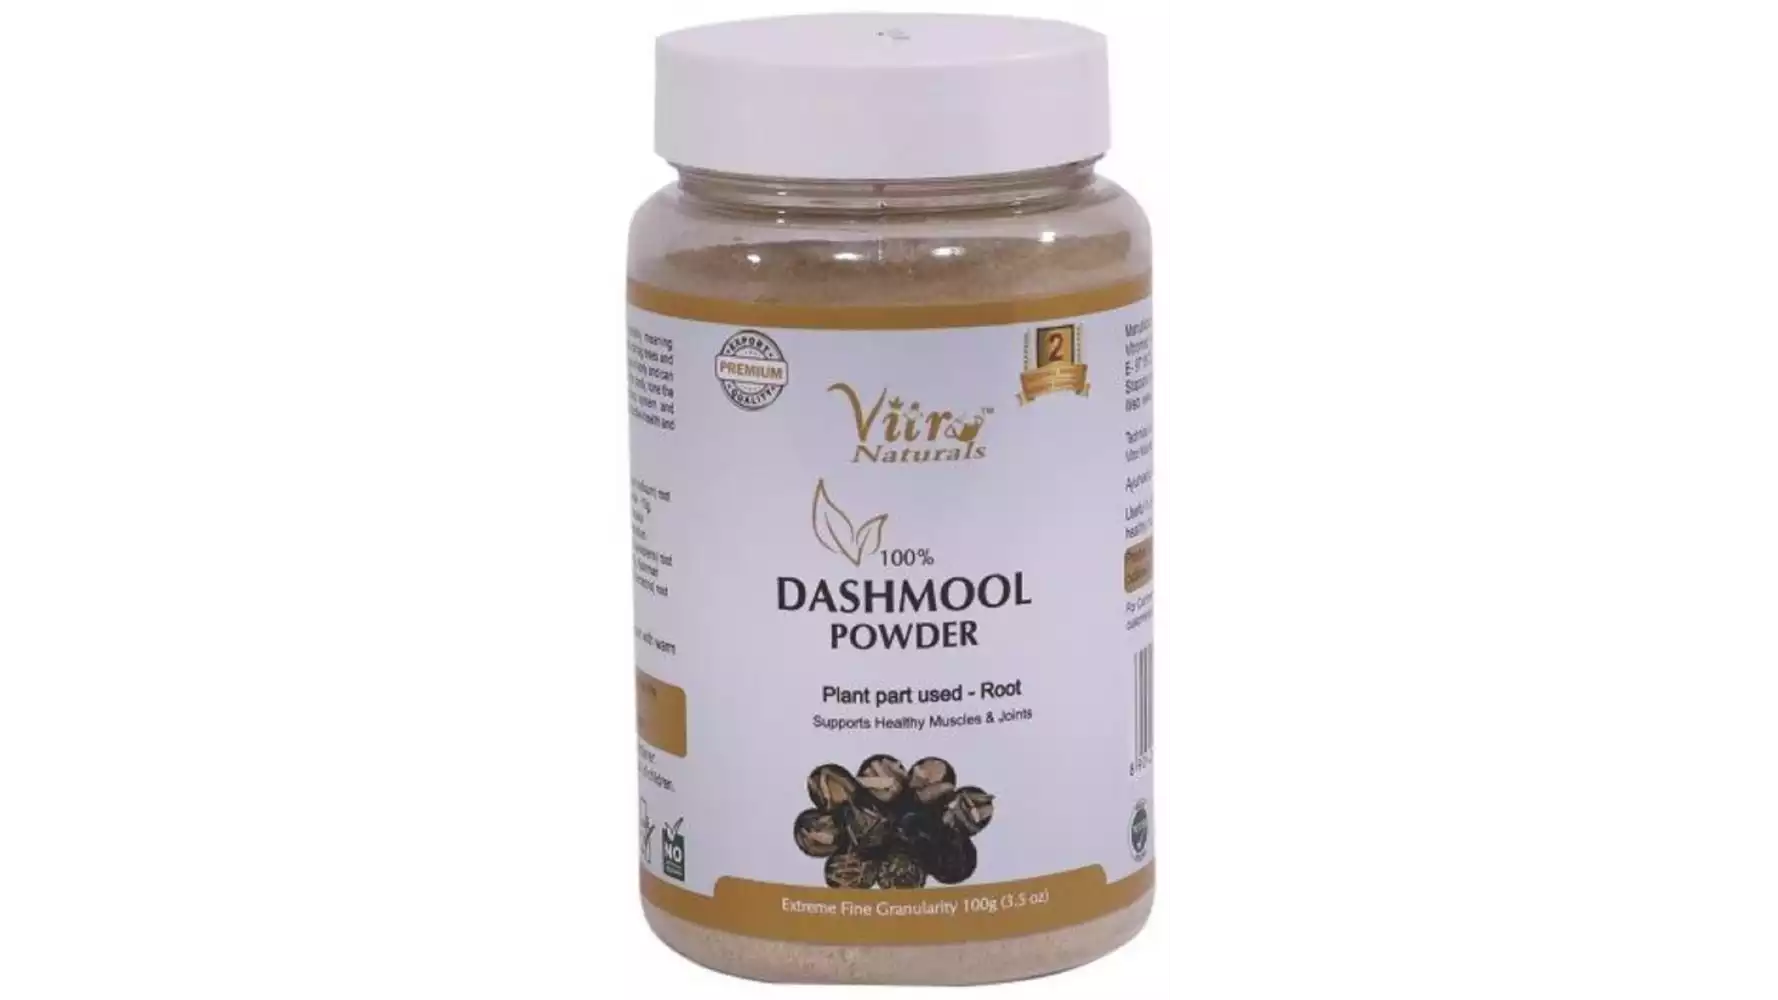 Vitro Naturals Dashmool Powder (100g)